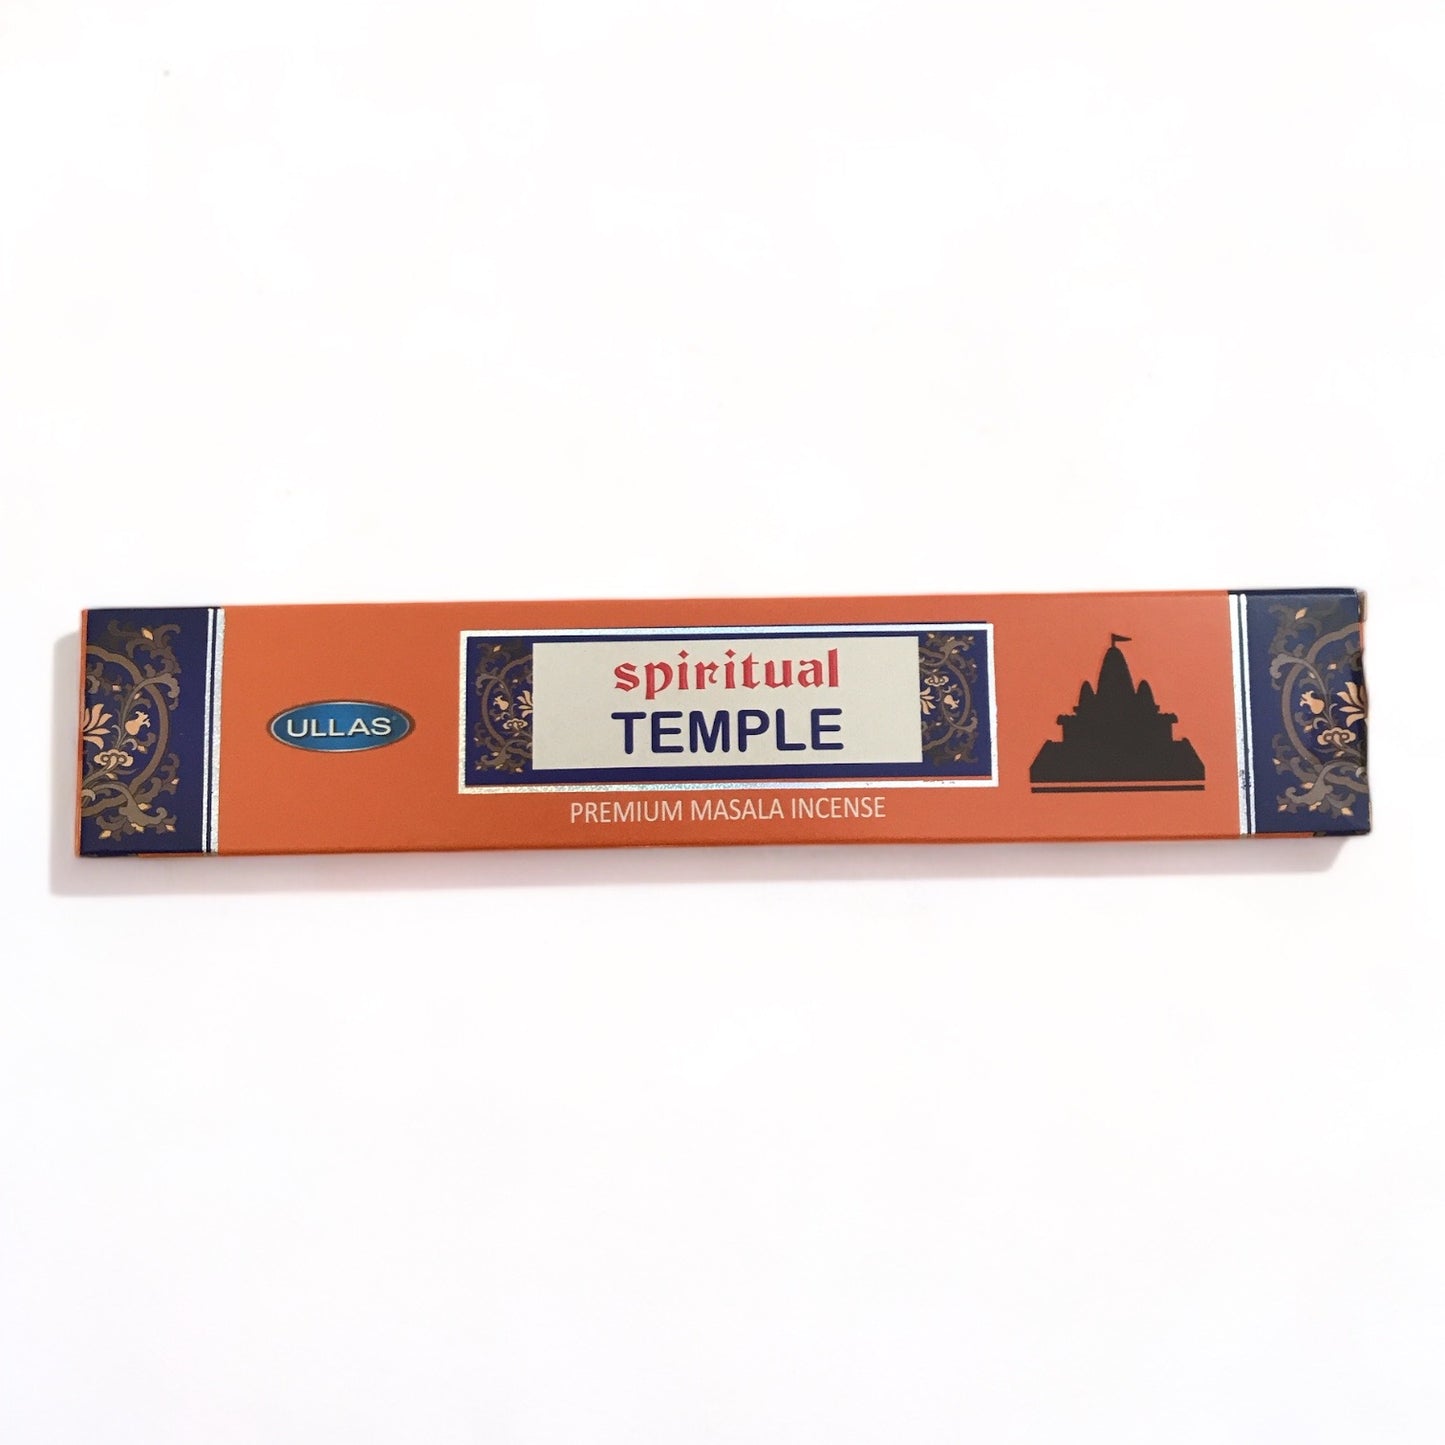 Spiritual Temple Incense - Ullas - 15g